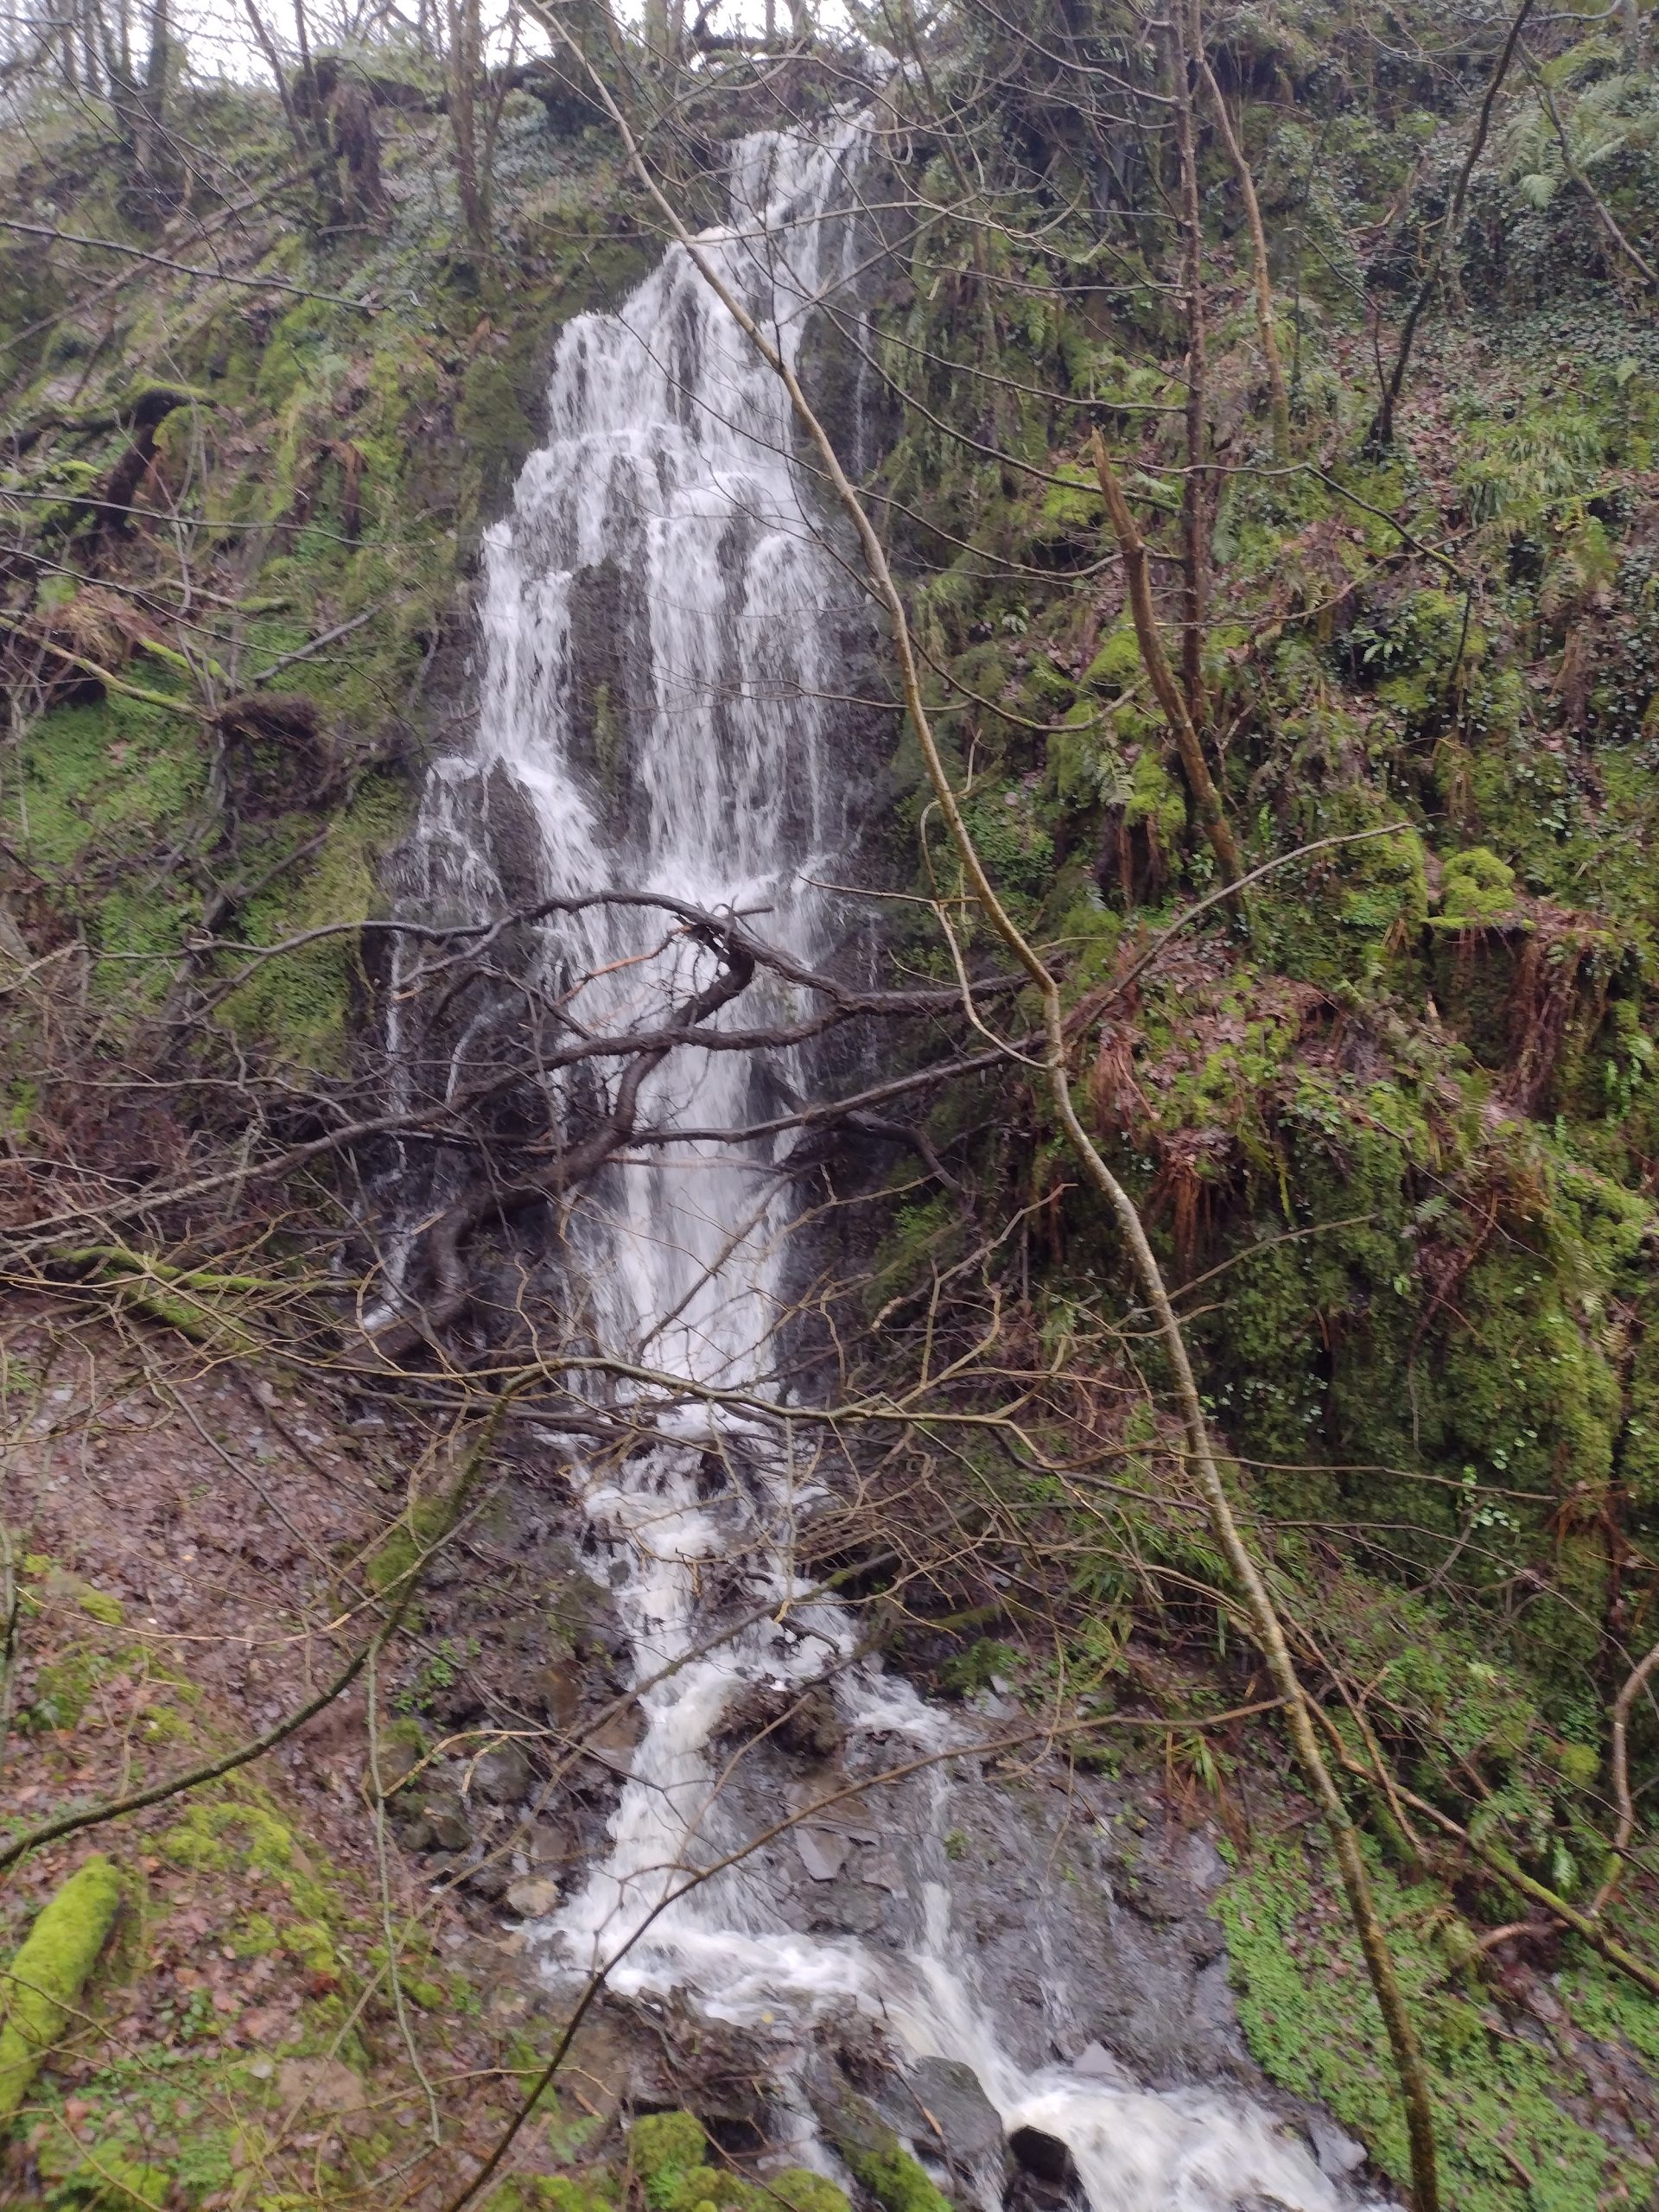 Tregynon Waterfall in the Preseli Mountains, Wales